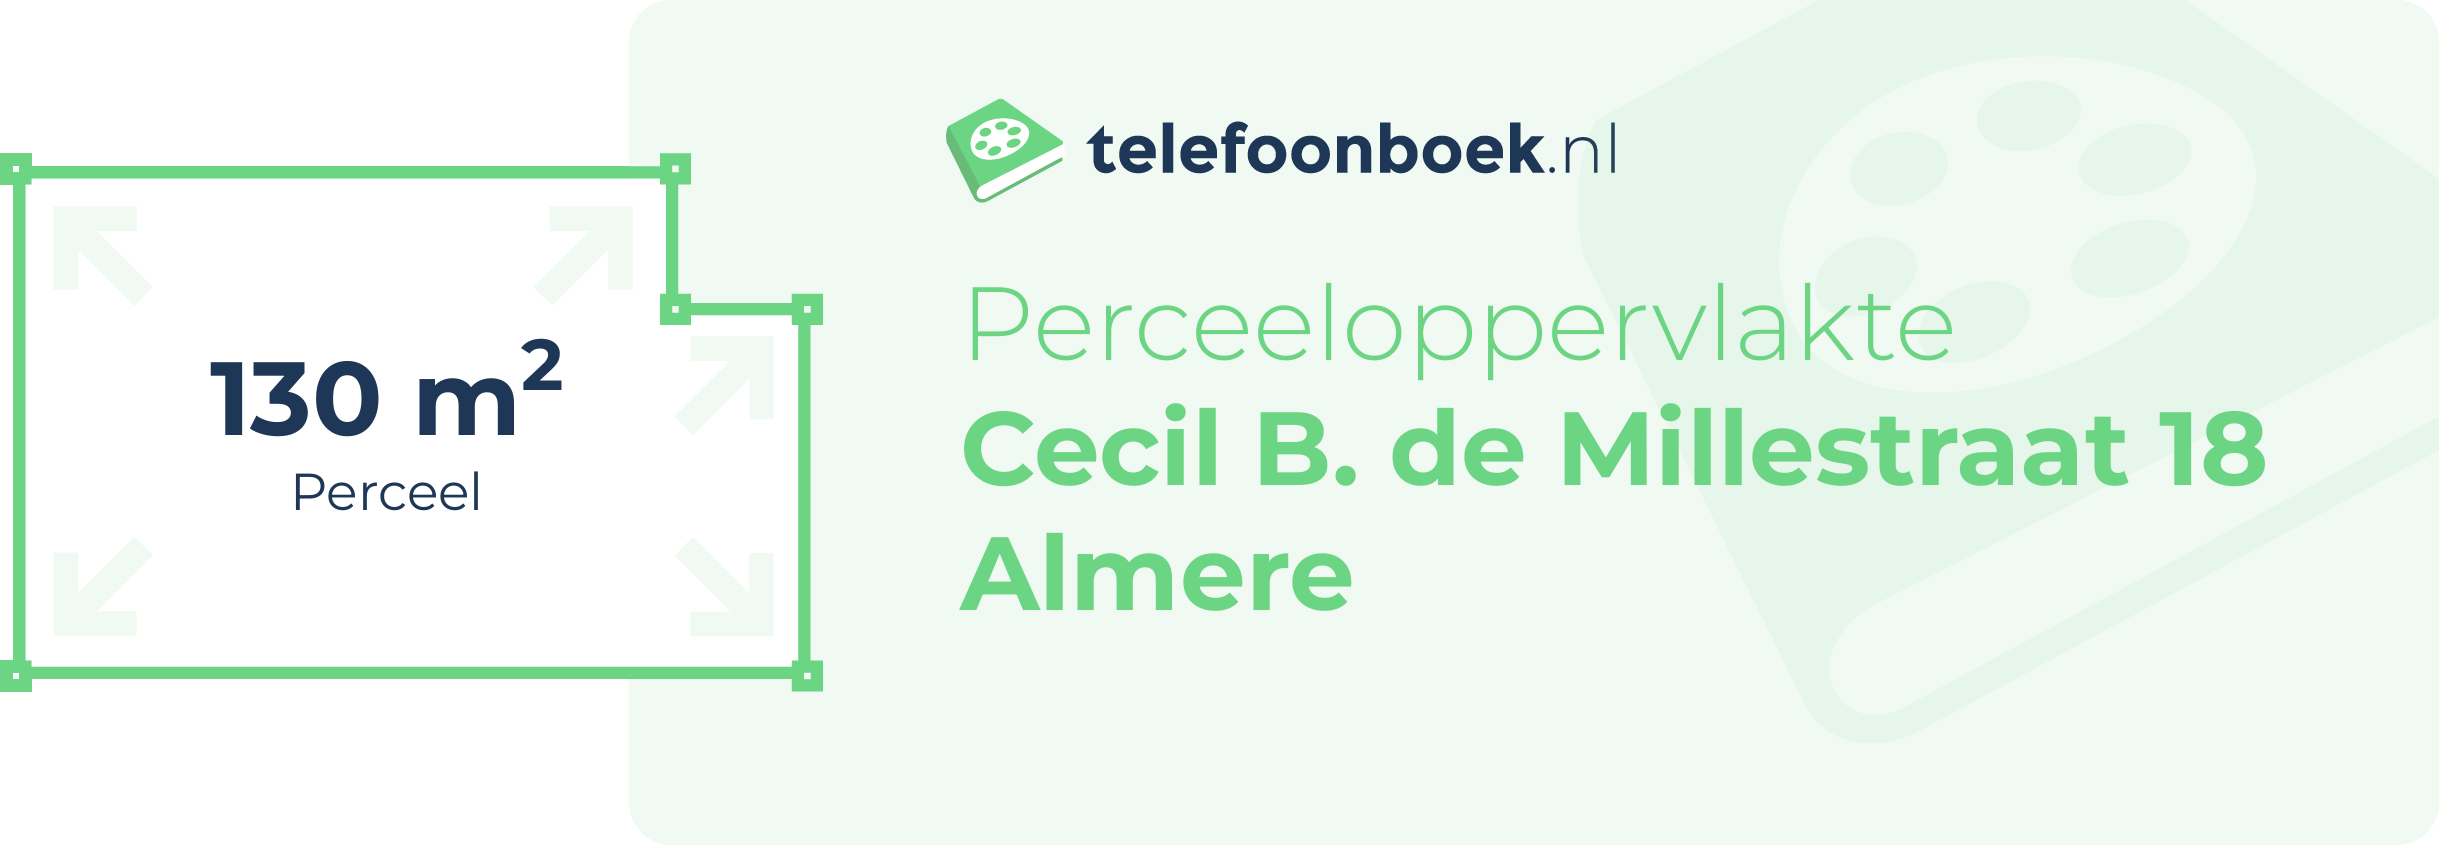 Perceeloppervlakte Cecil B. De Millestraat 18 Almere